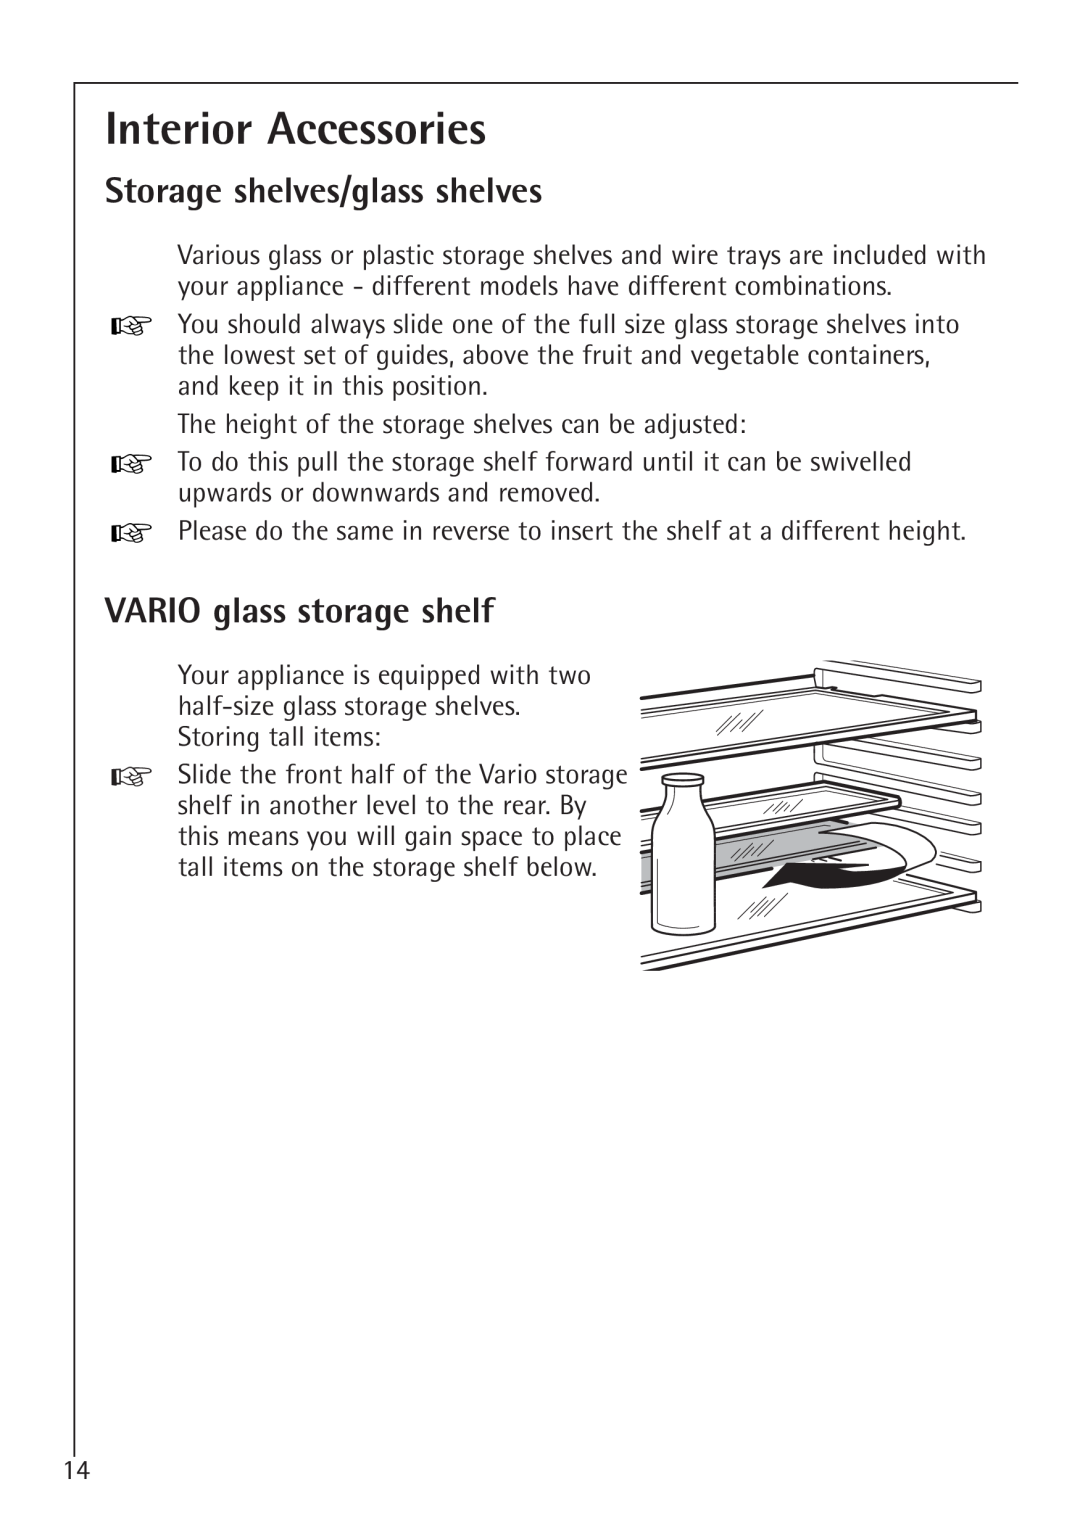 AEG 1450-7 TK manual Interior Accessories, Storage shelves/glass shelves, VARIO glass storage shelf 